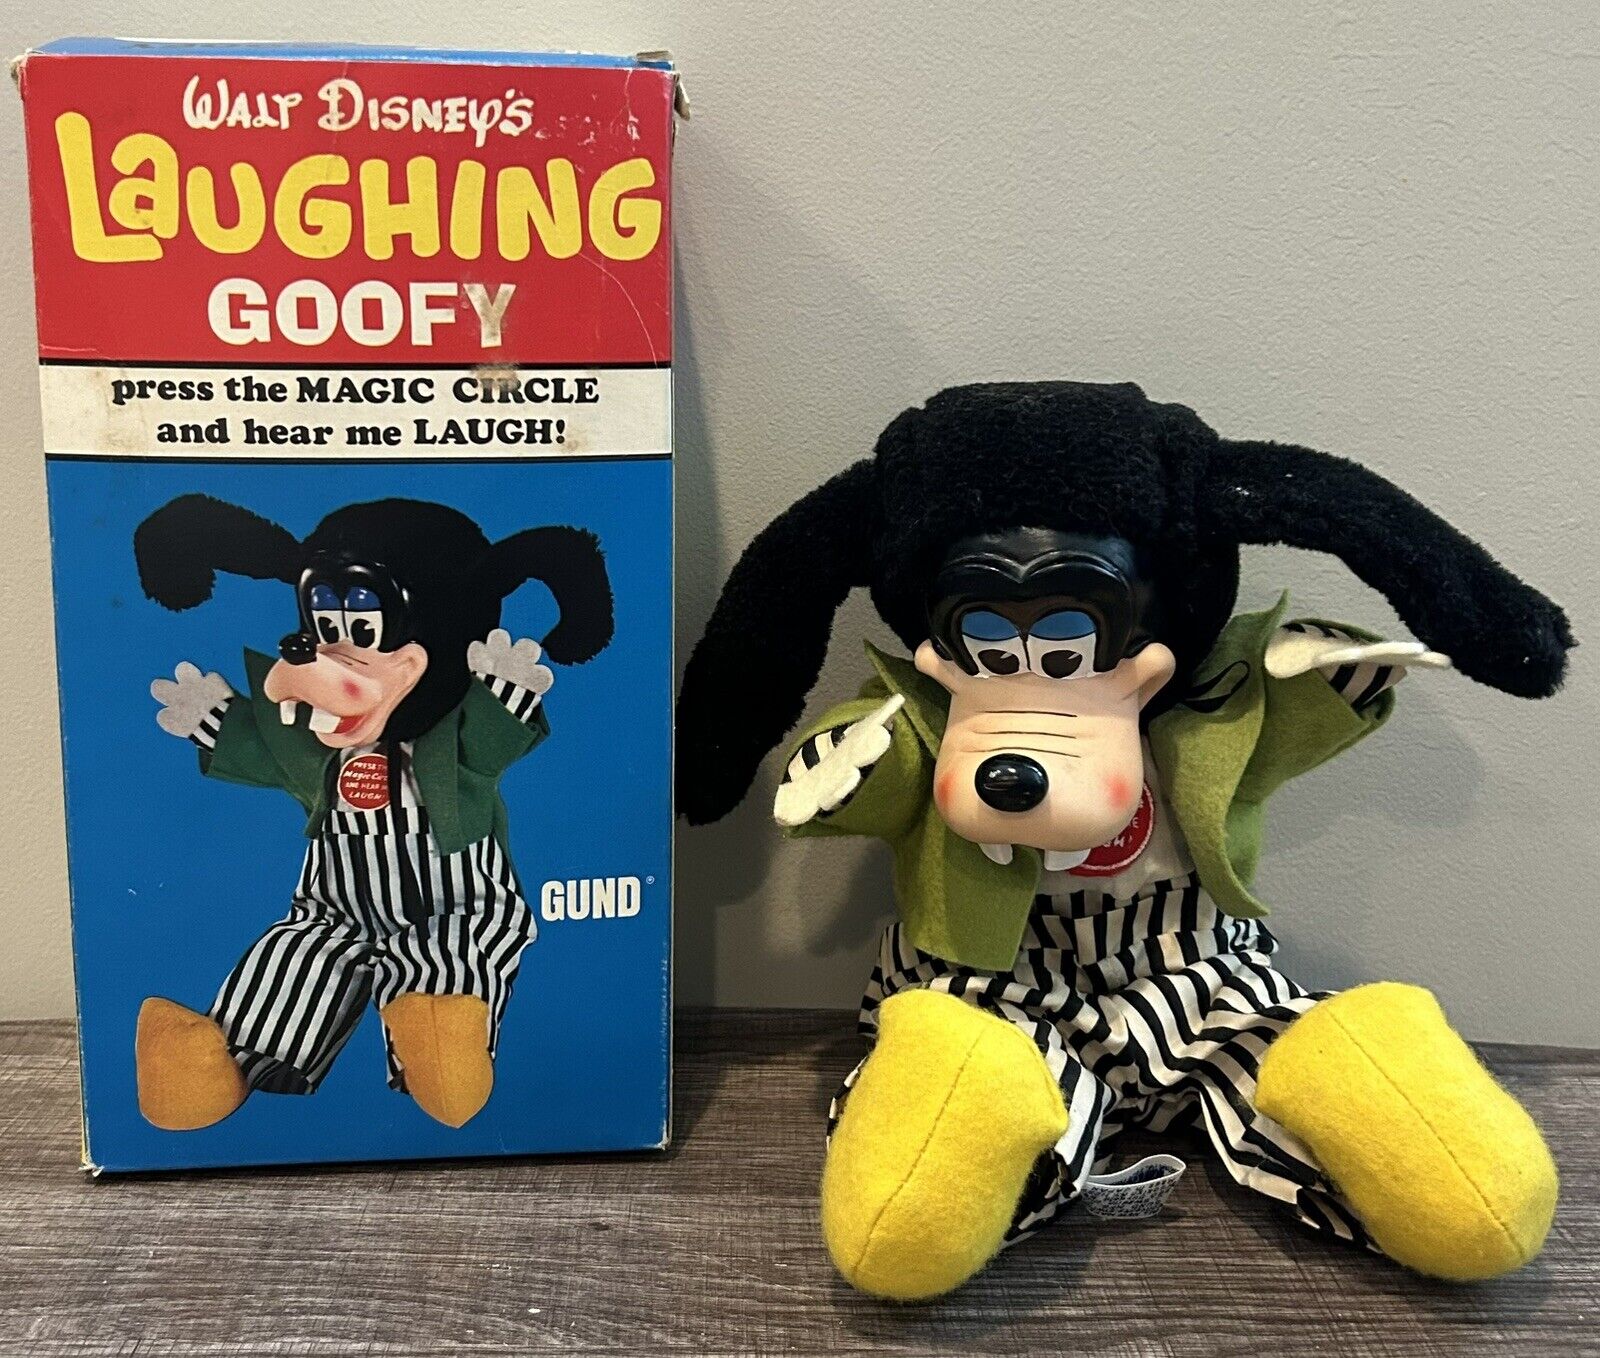 Vintage Gund Walt Disney’s Laughing Goofy Toy Doll + Box 1960’s? Japan